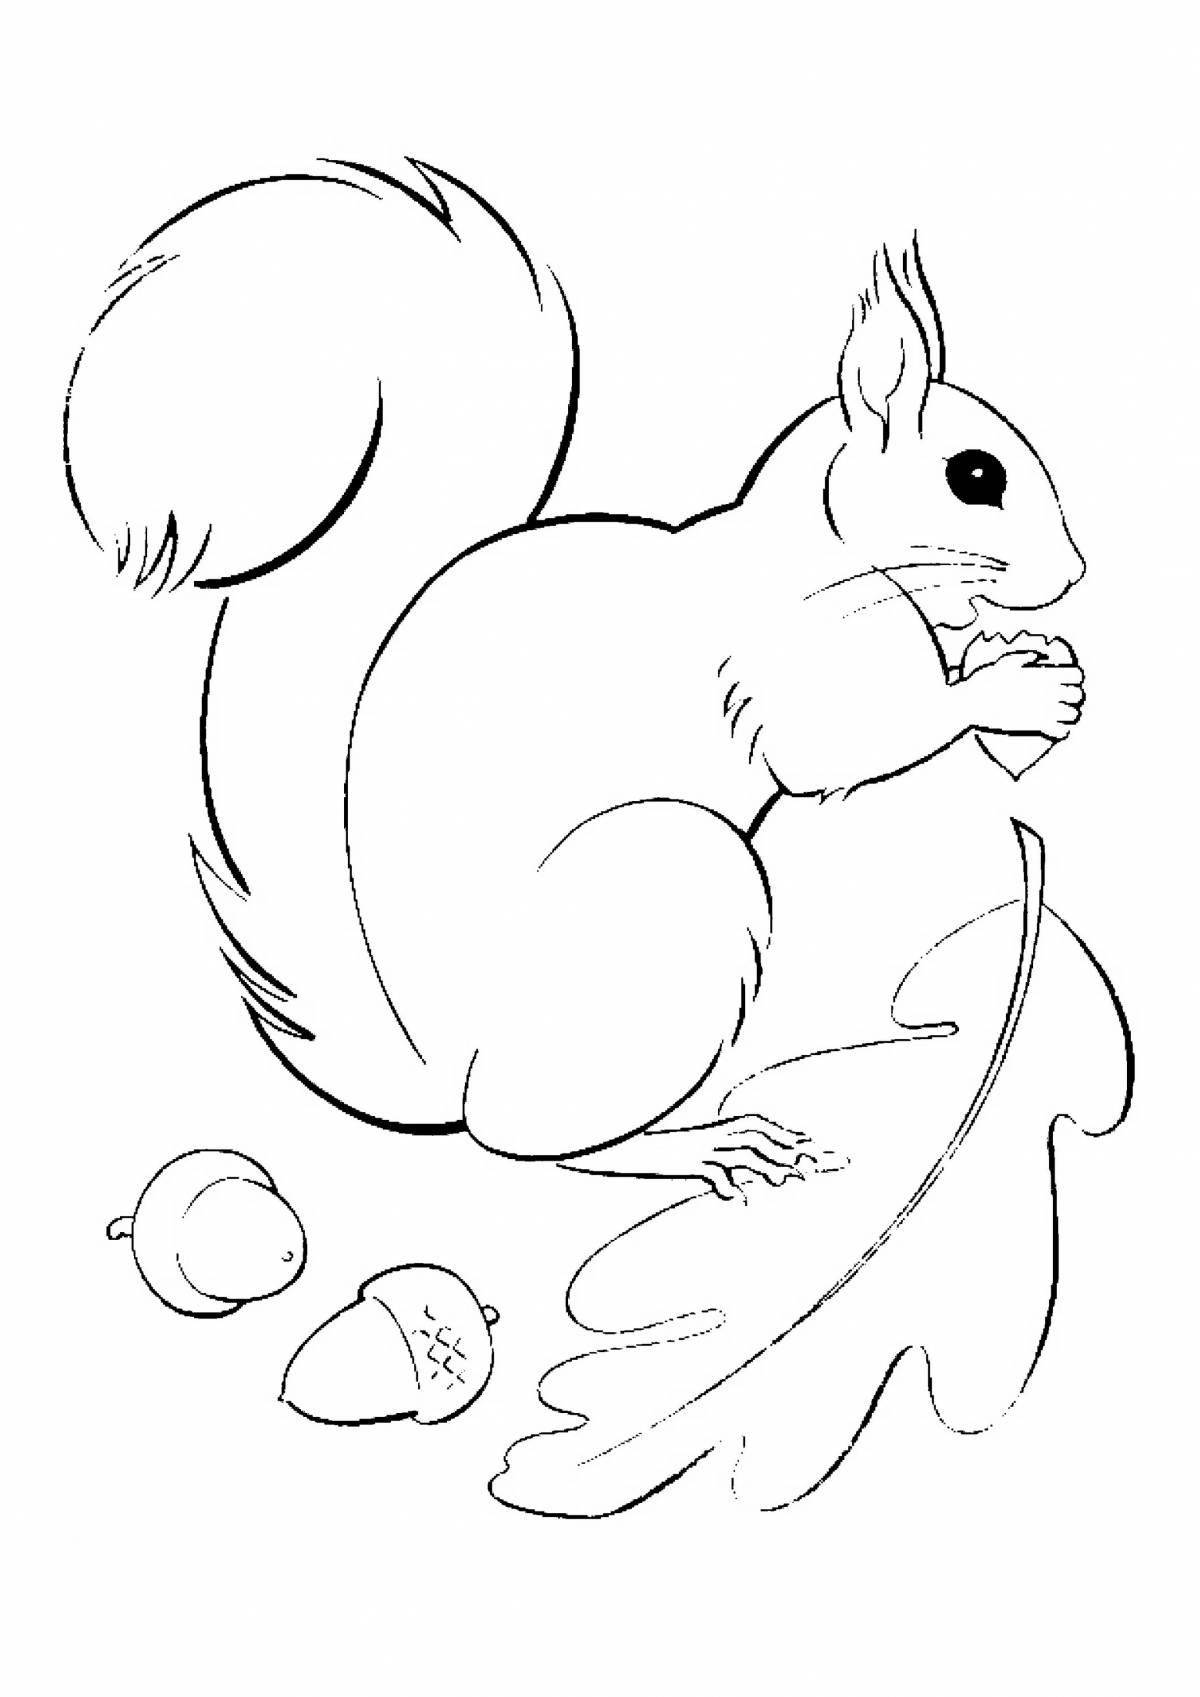 Fun squirrel coloring book for kids